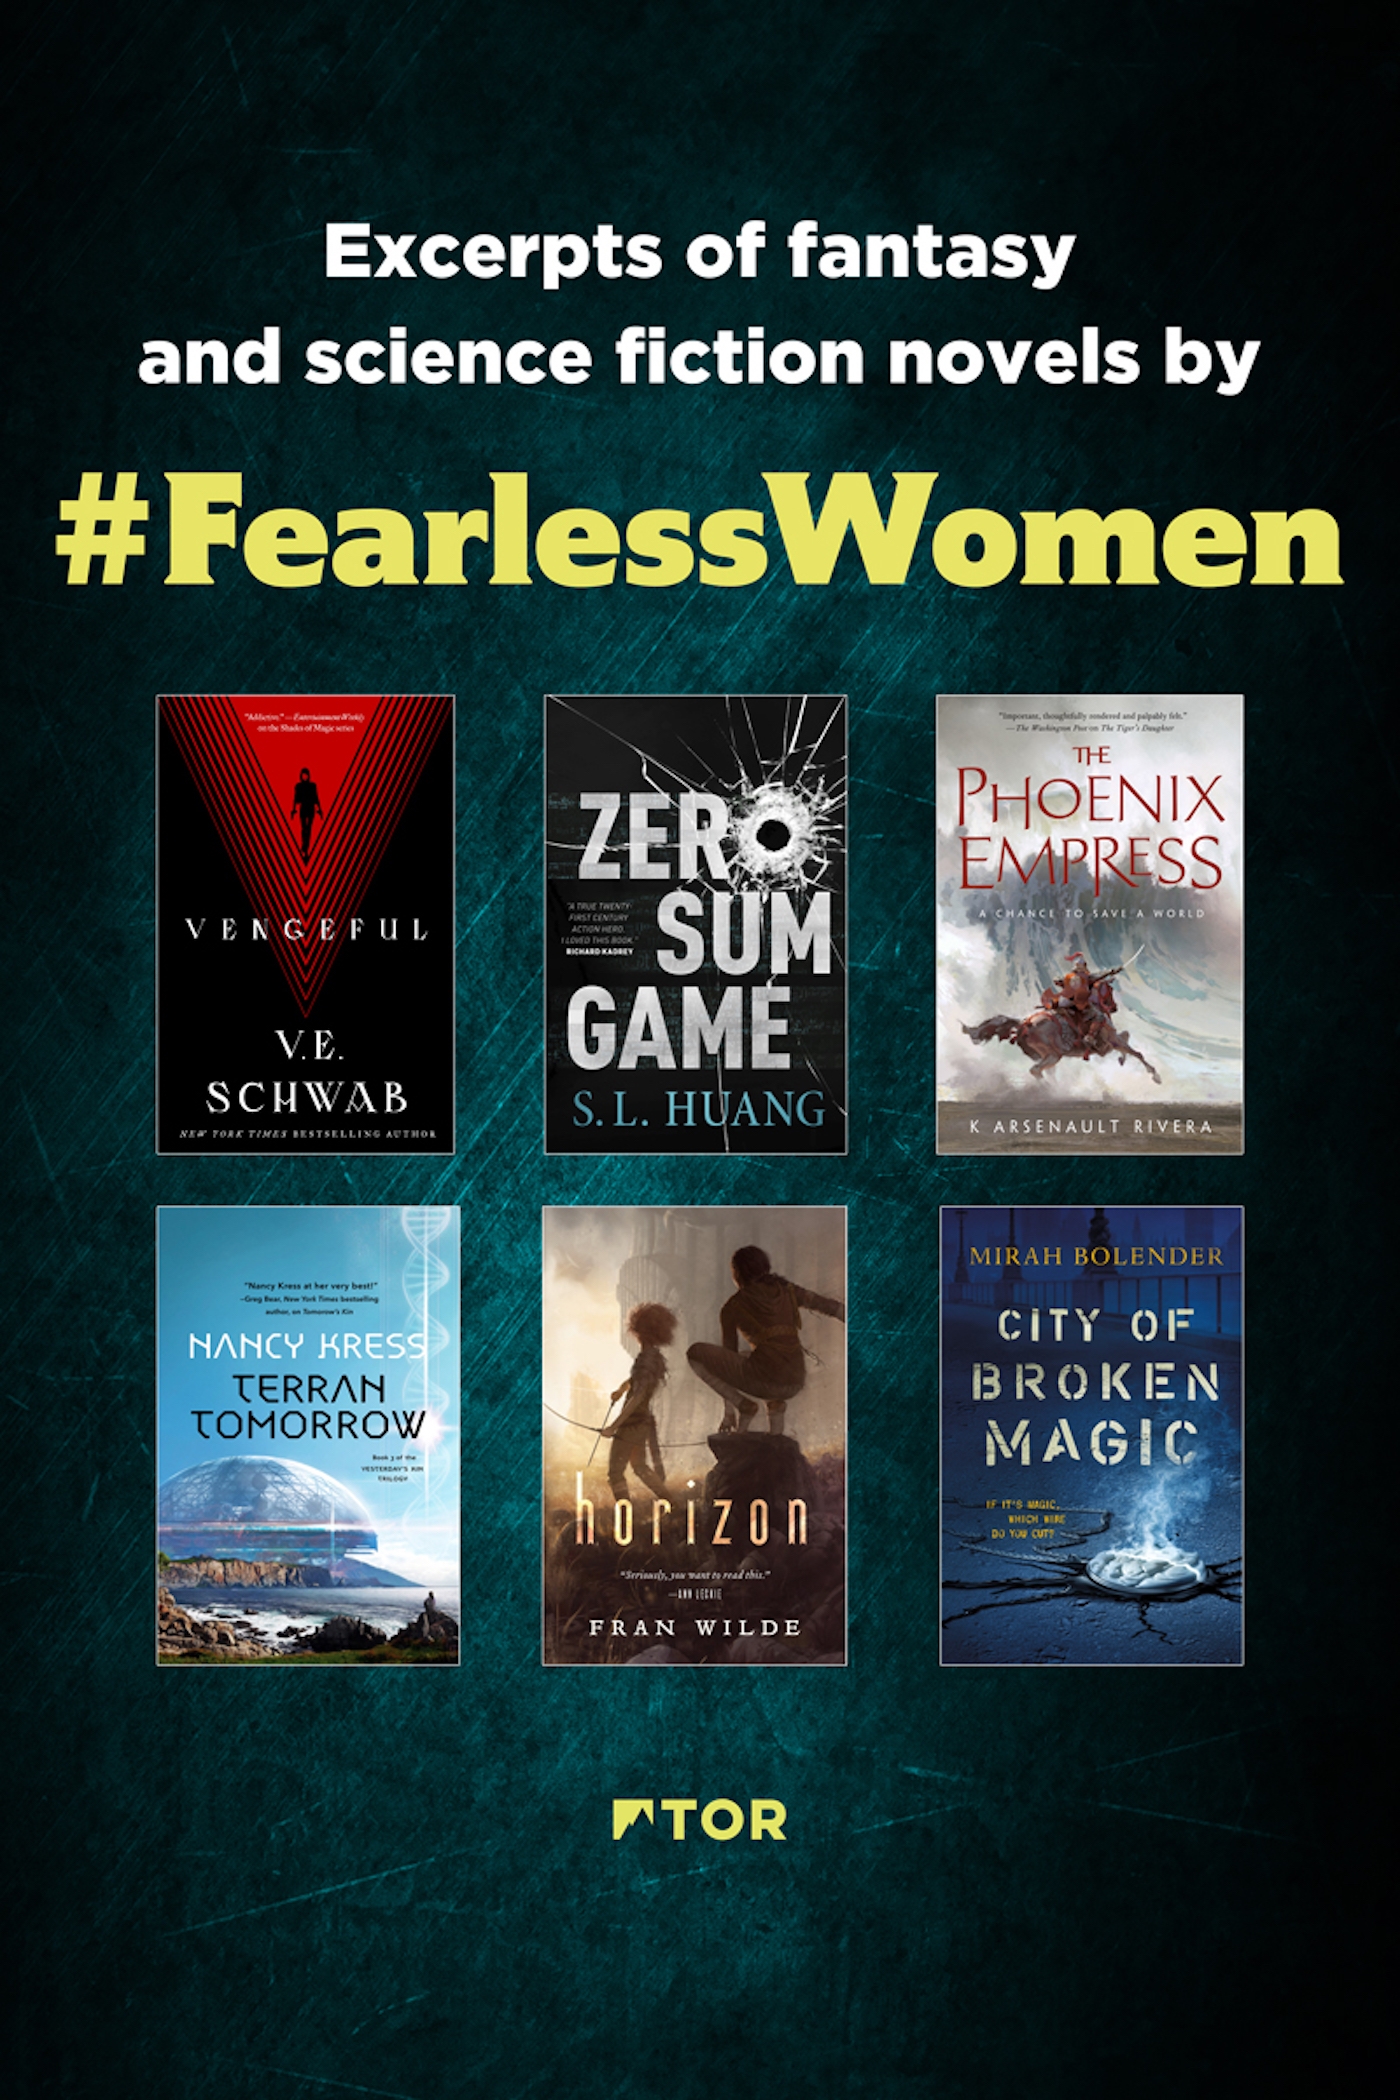 Fearless Women Fall Sampler : Excerpts of Science Fiction and Fantasy Novels by Fearless Women by V. E. Schwab, S. L. Huang, K Arsenault Rivera, Nancy Kress, Mirah Bolender, Fran Wilde